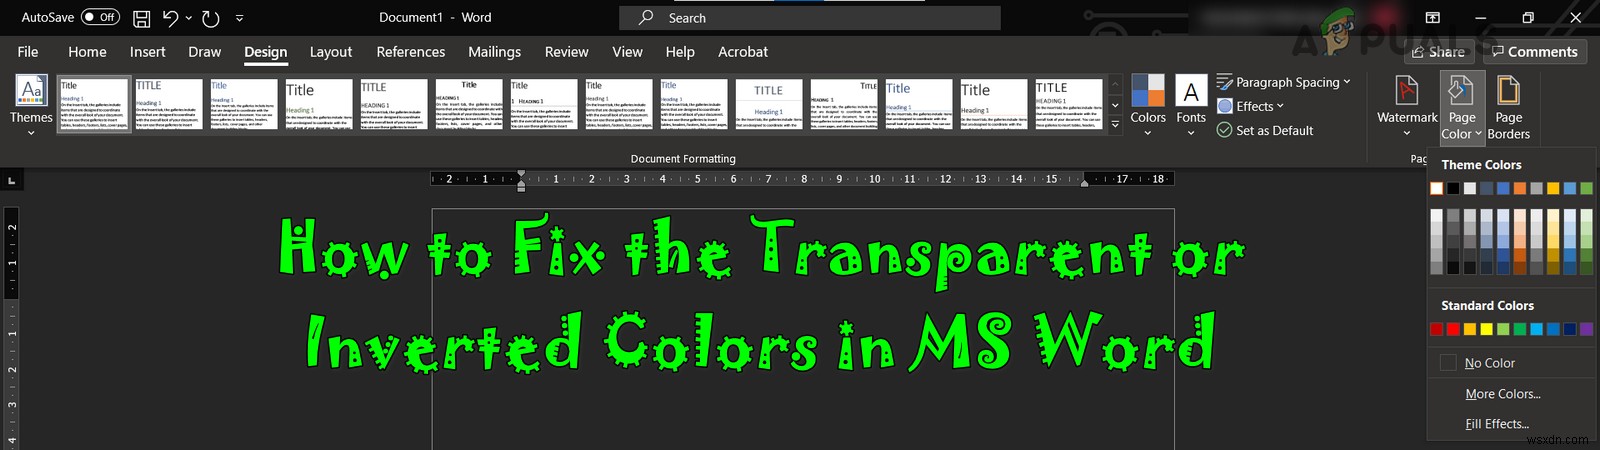 MS Word에서 투명하거나 반전된 색상을 수정하는 방법은 무엇입니까? 